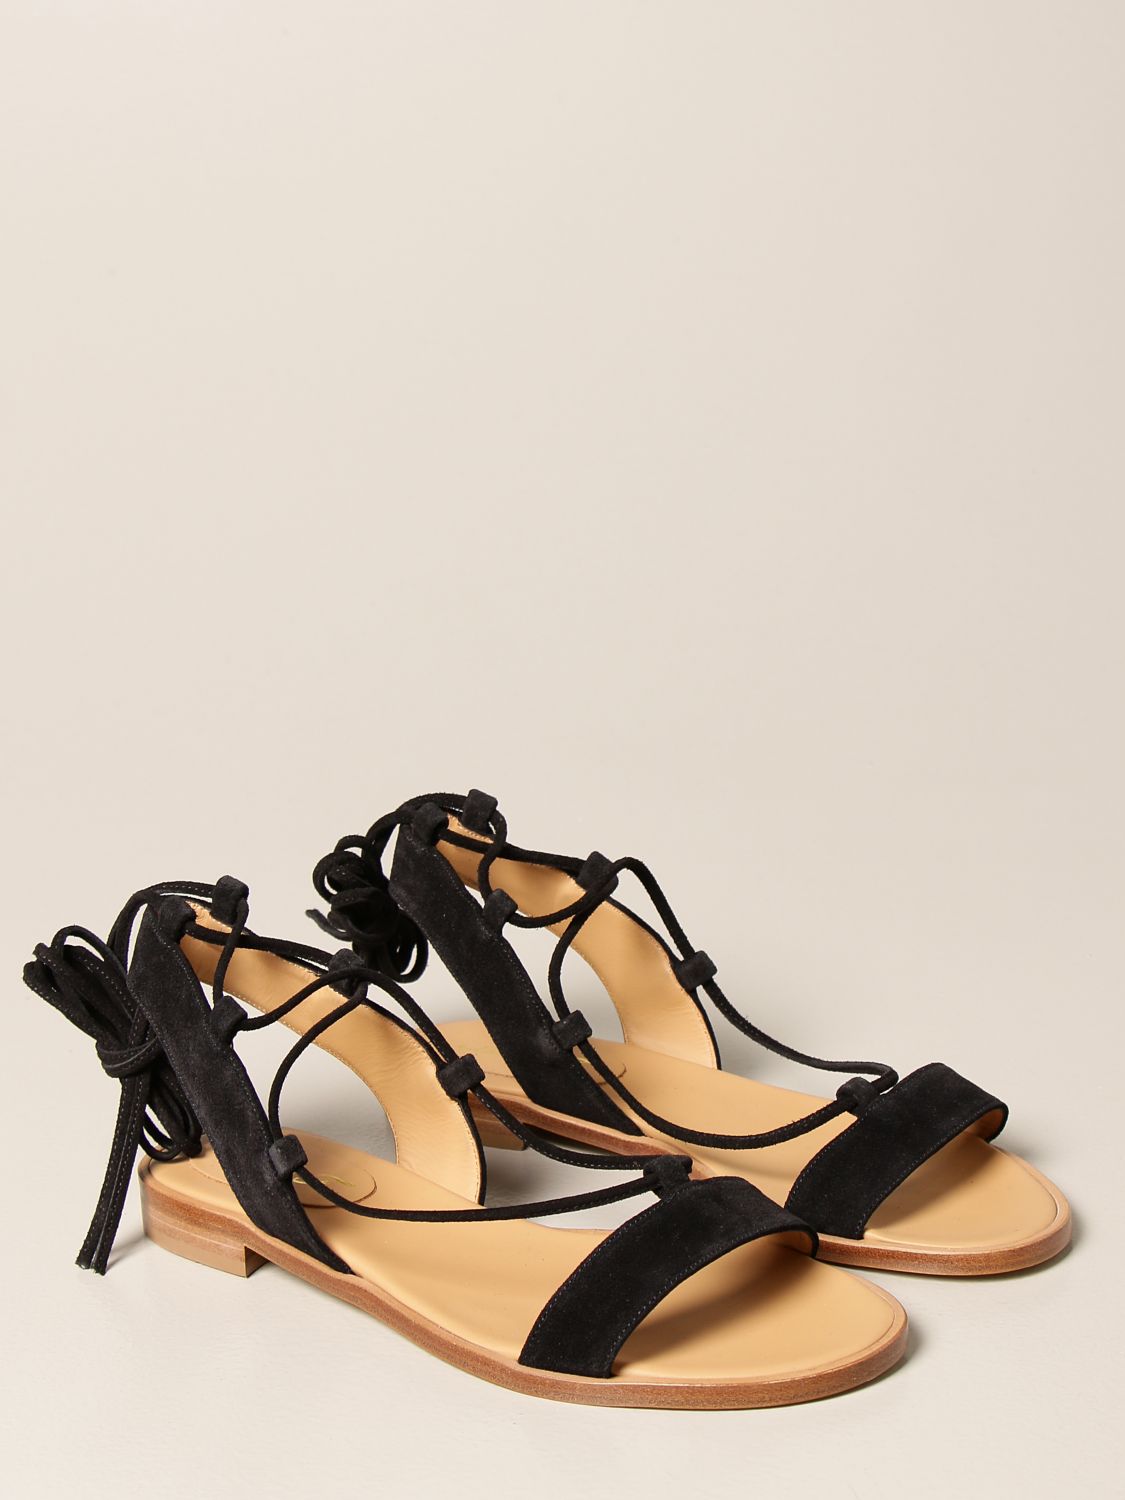 Sandales plates Anna F.: Chaussures femme Anna F. noir 2